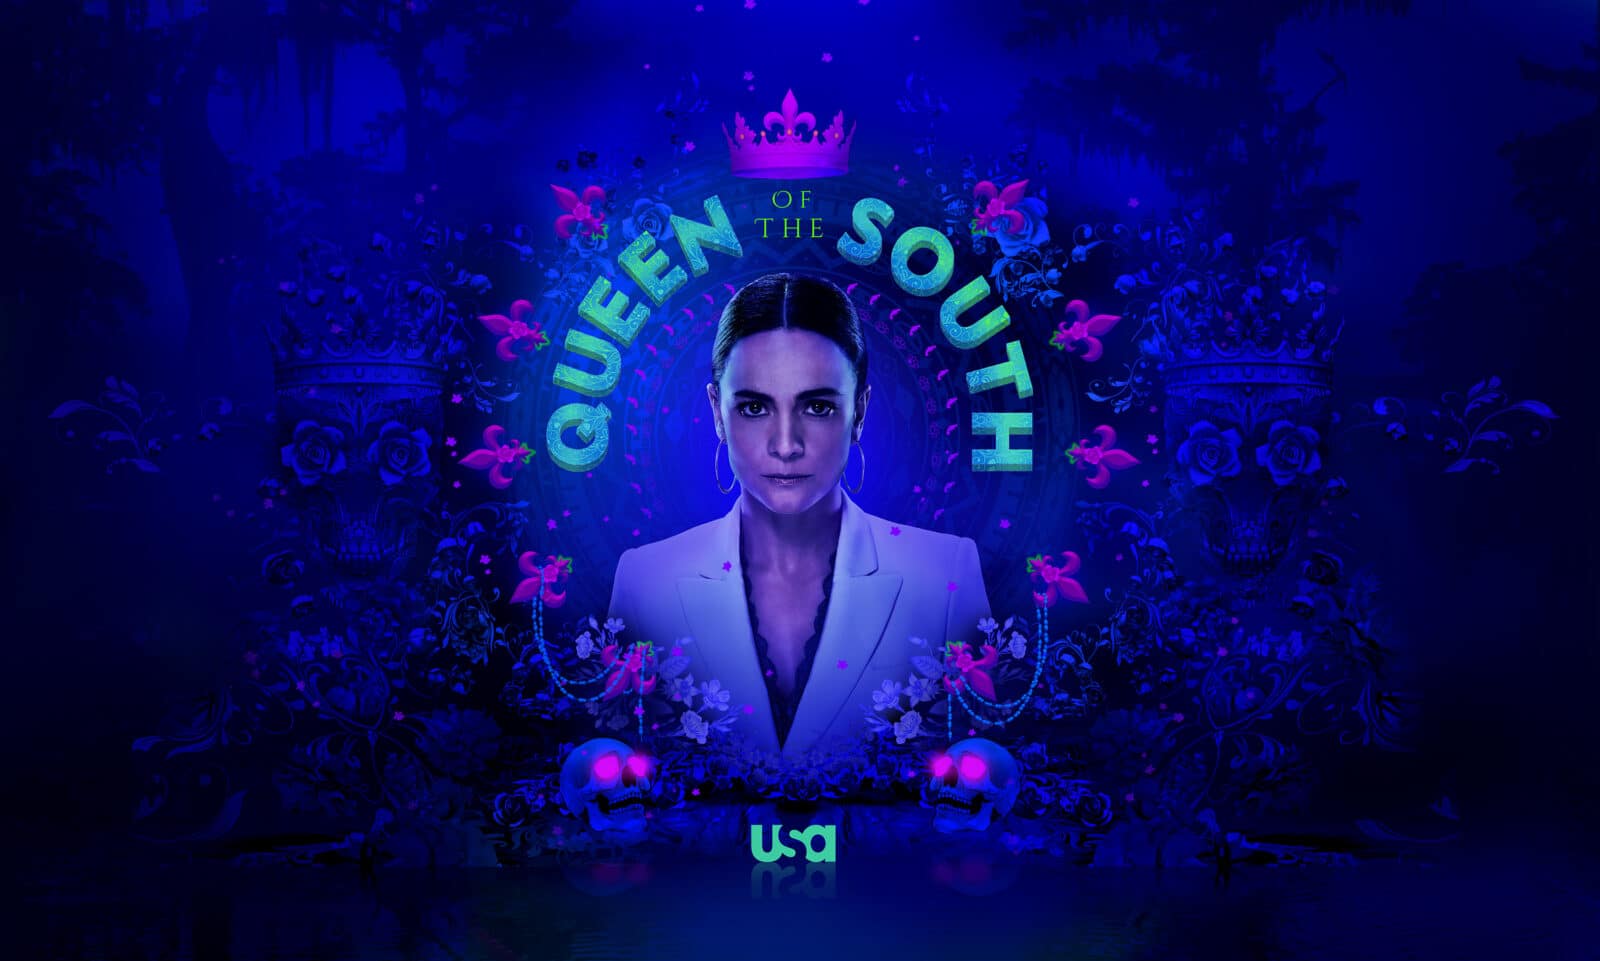 Queen of the south season 5